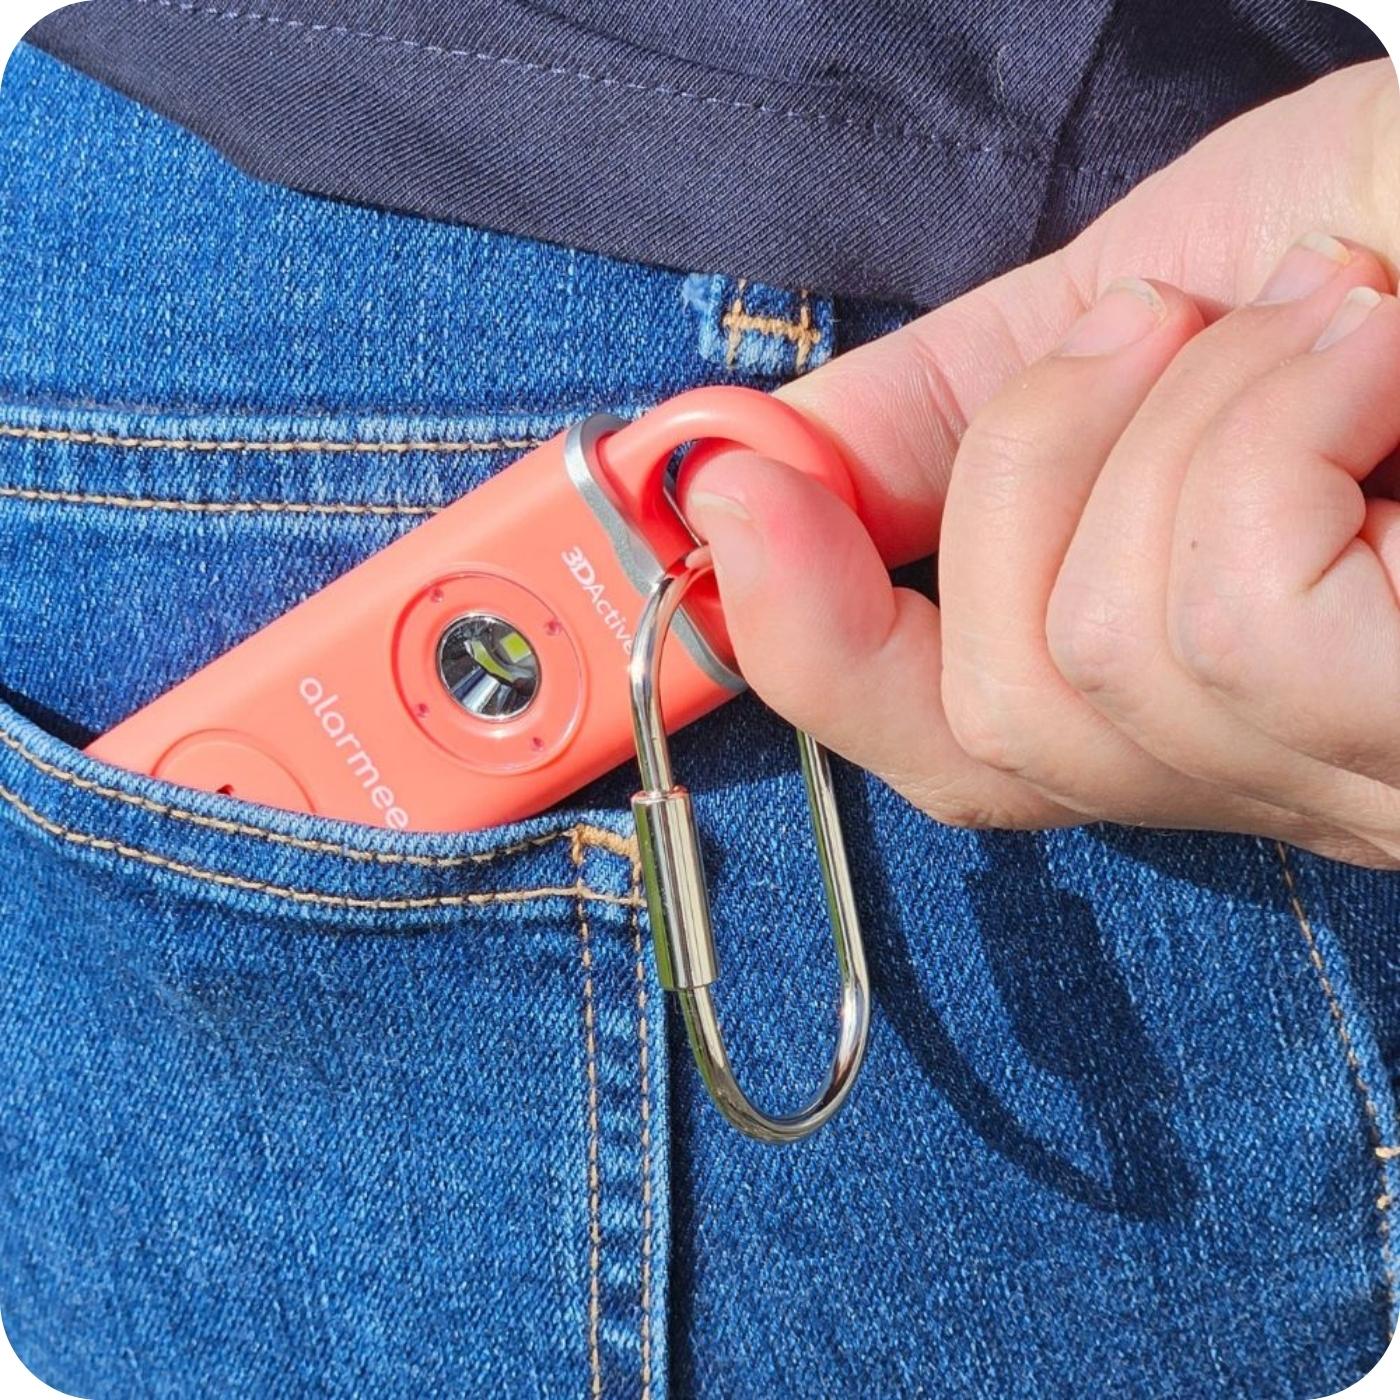 Hand placing self defense keychain (Alarmee) in back pocket